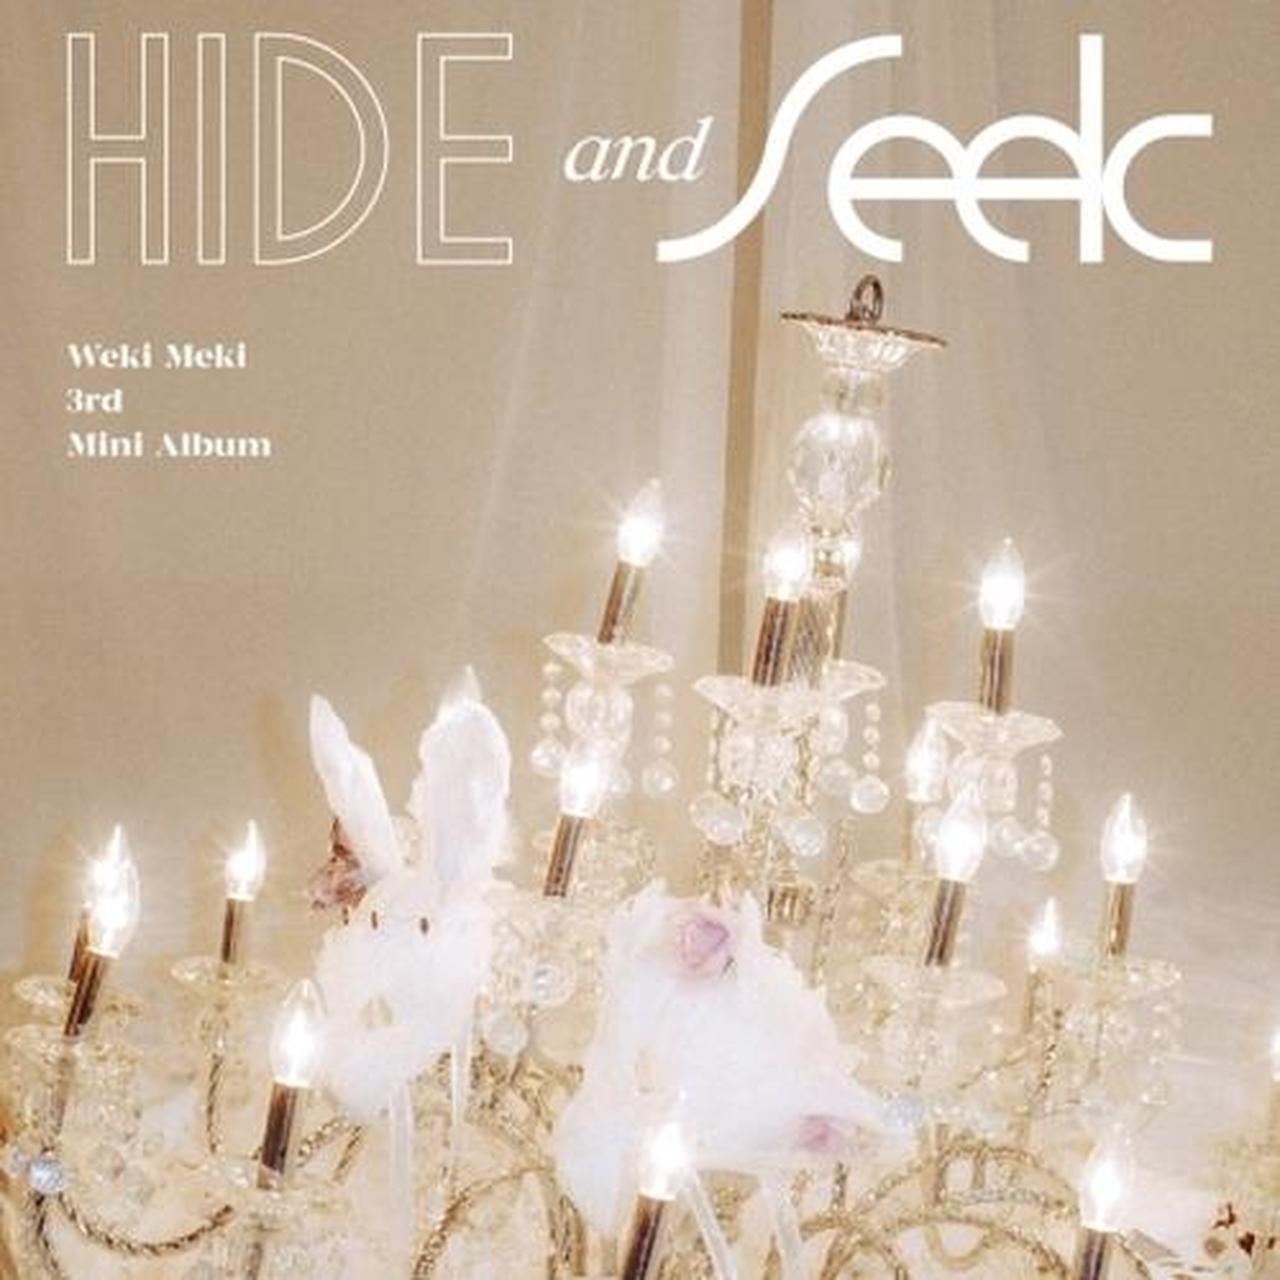 Weki Meki - 3rd Mini Album - Hide and Seek